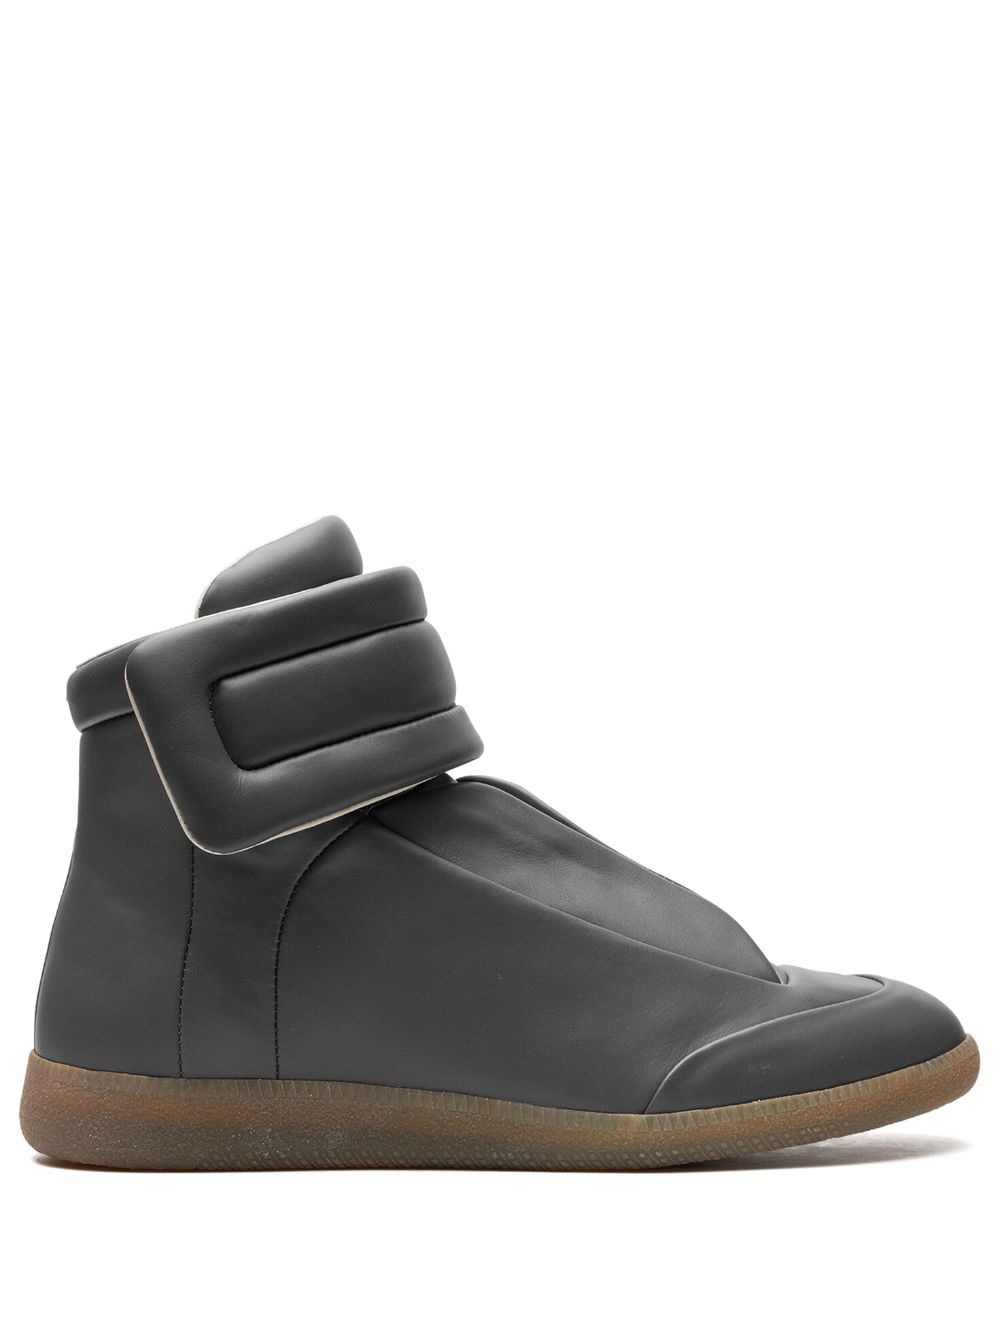 Maison Margiela Future High "black/gum" Sneakers In Gray